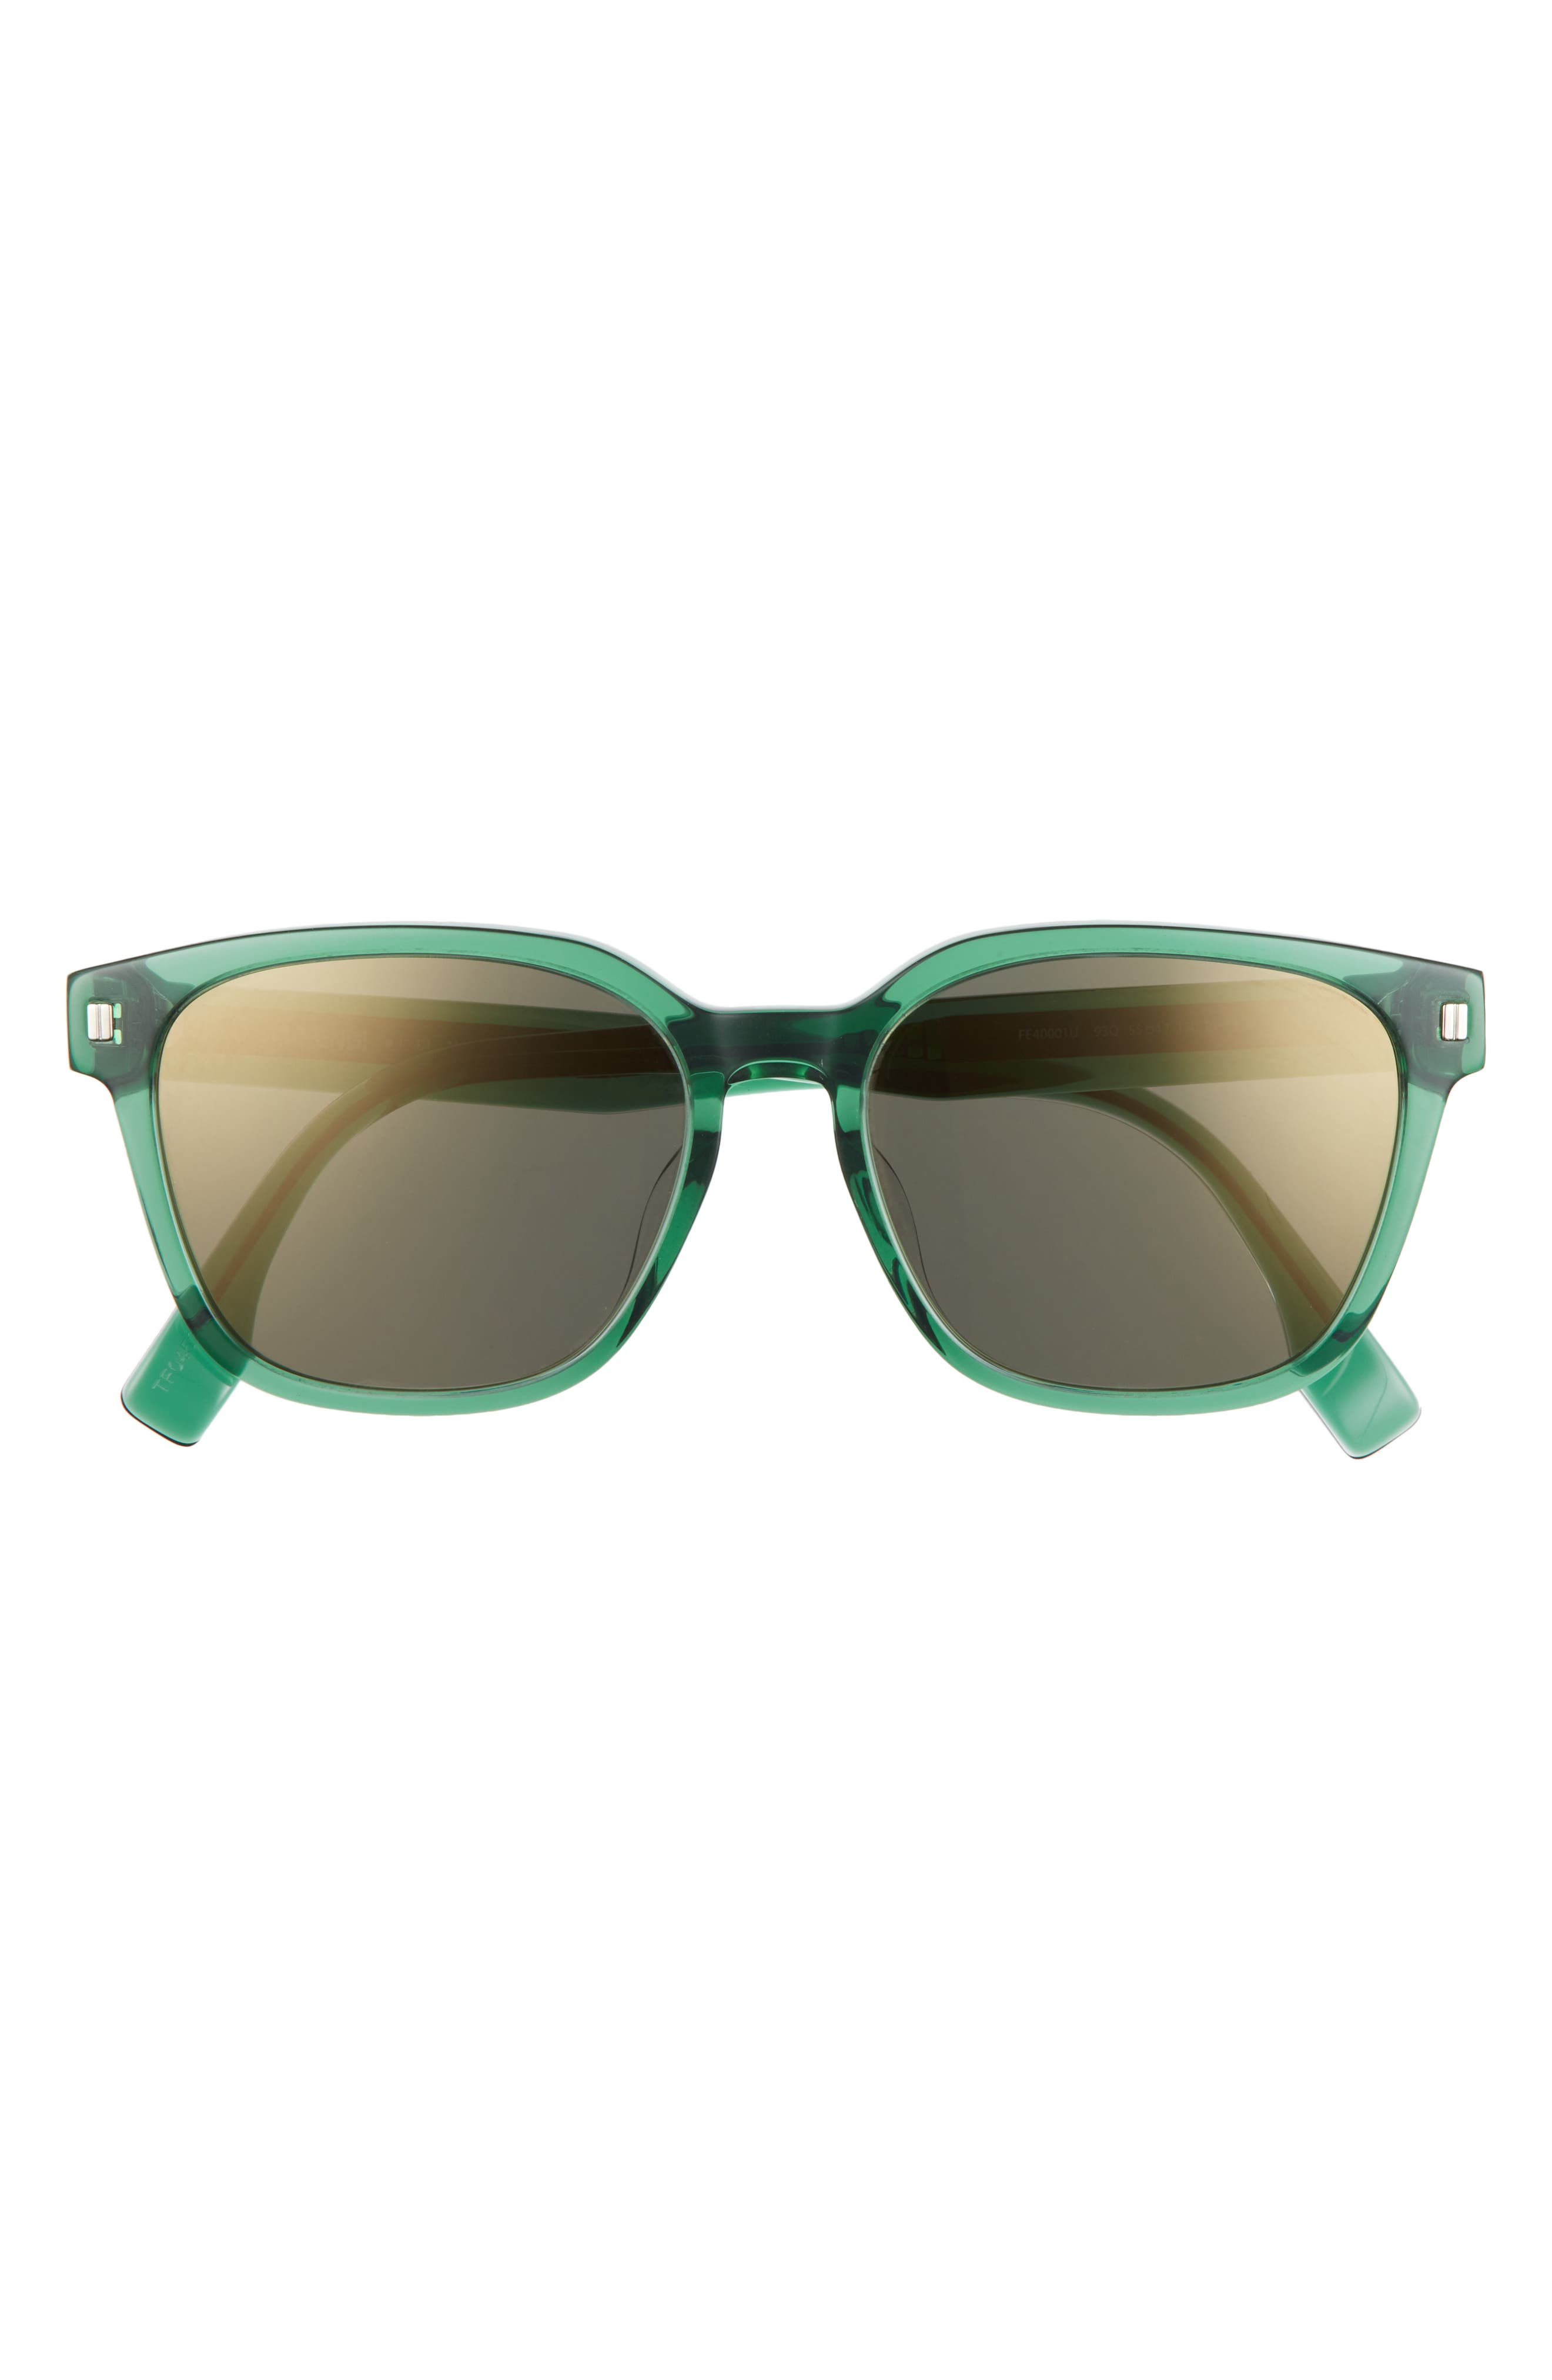 Fendi 55mm Square Sunglasses in Shiny Light Green Mirror at Nordstrom